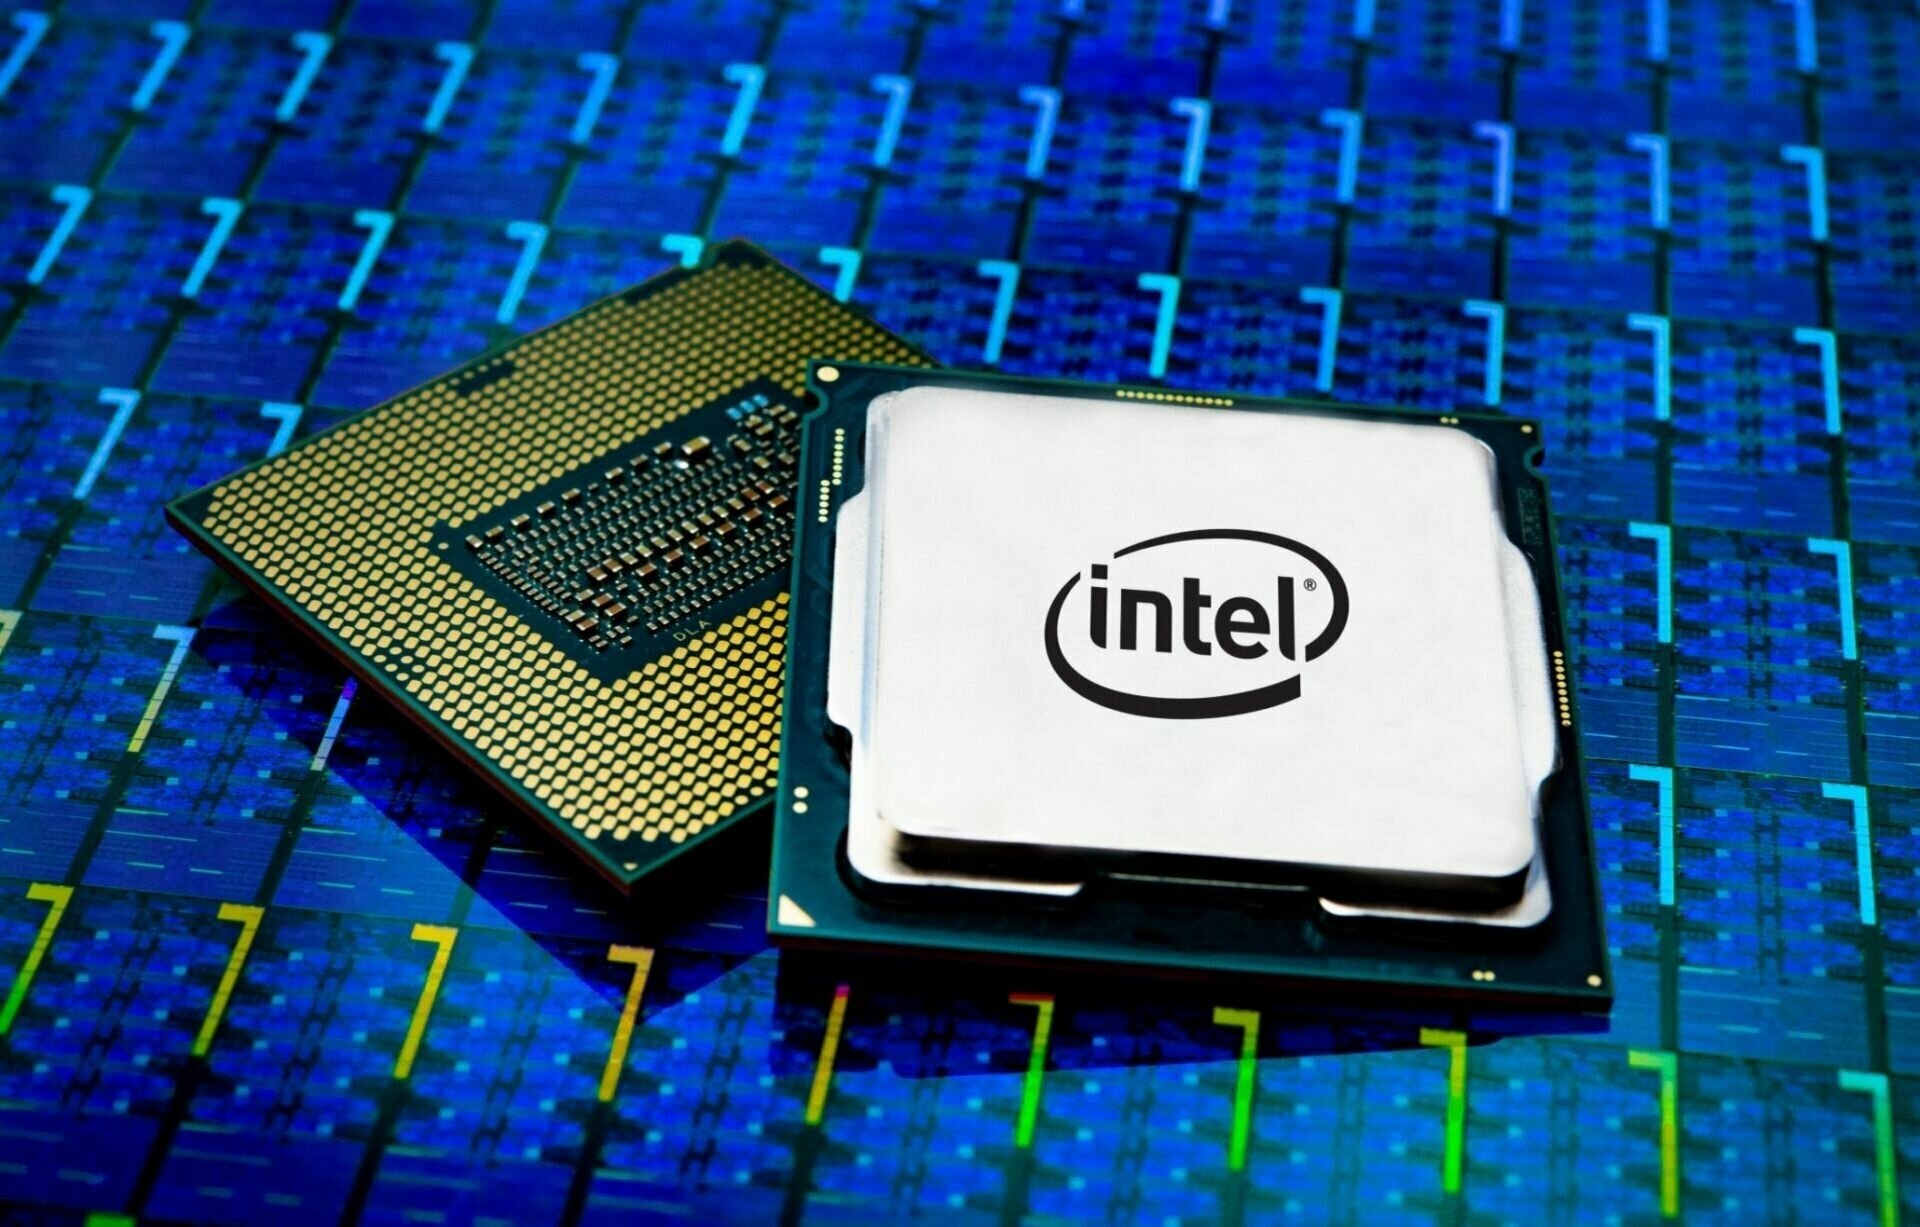 Процессор Intel Core i5-3570 Ivy Bridge LGA1155 4 x 3400 МГц